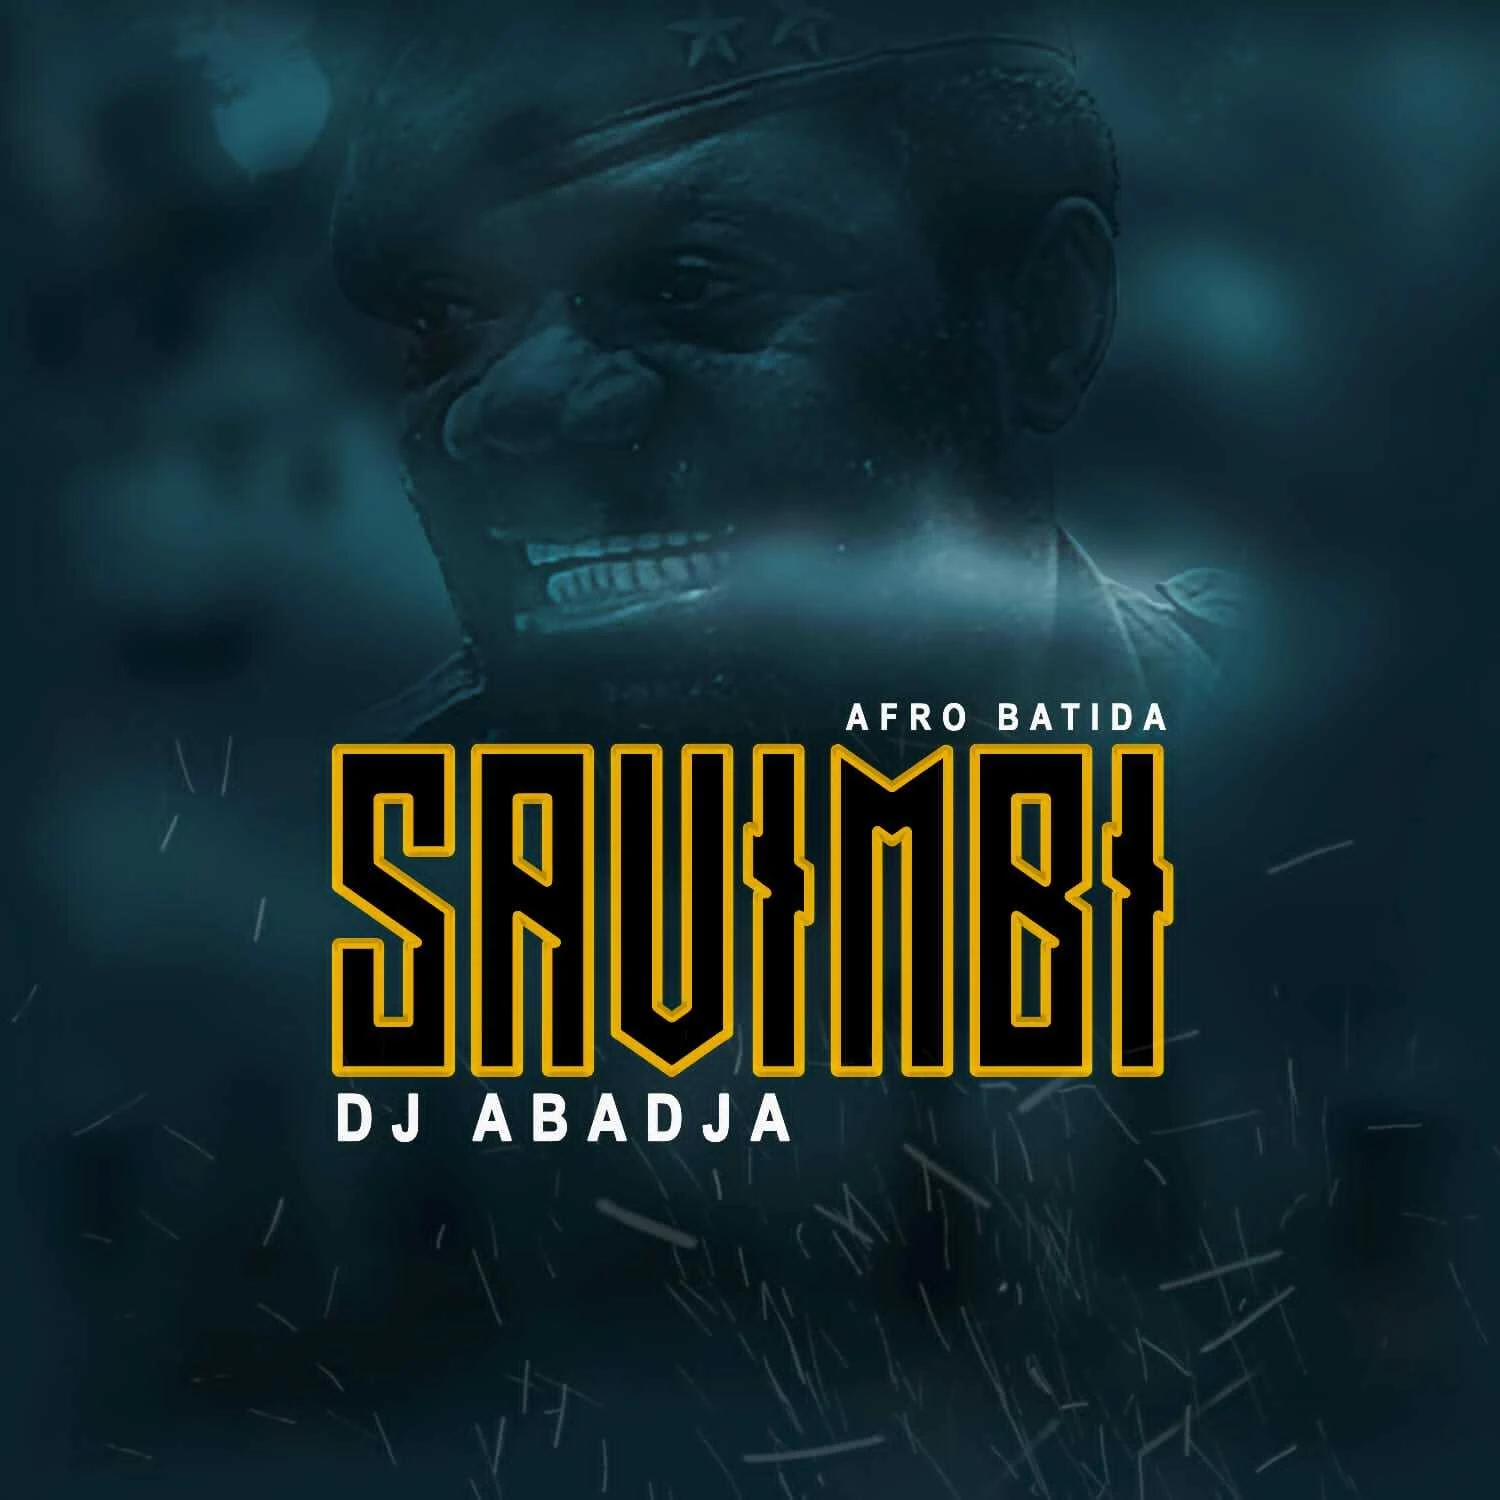 Dj Abadja - Savimbi (Afro Batida Instrumental)